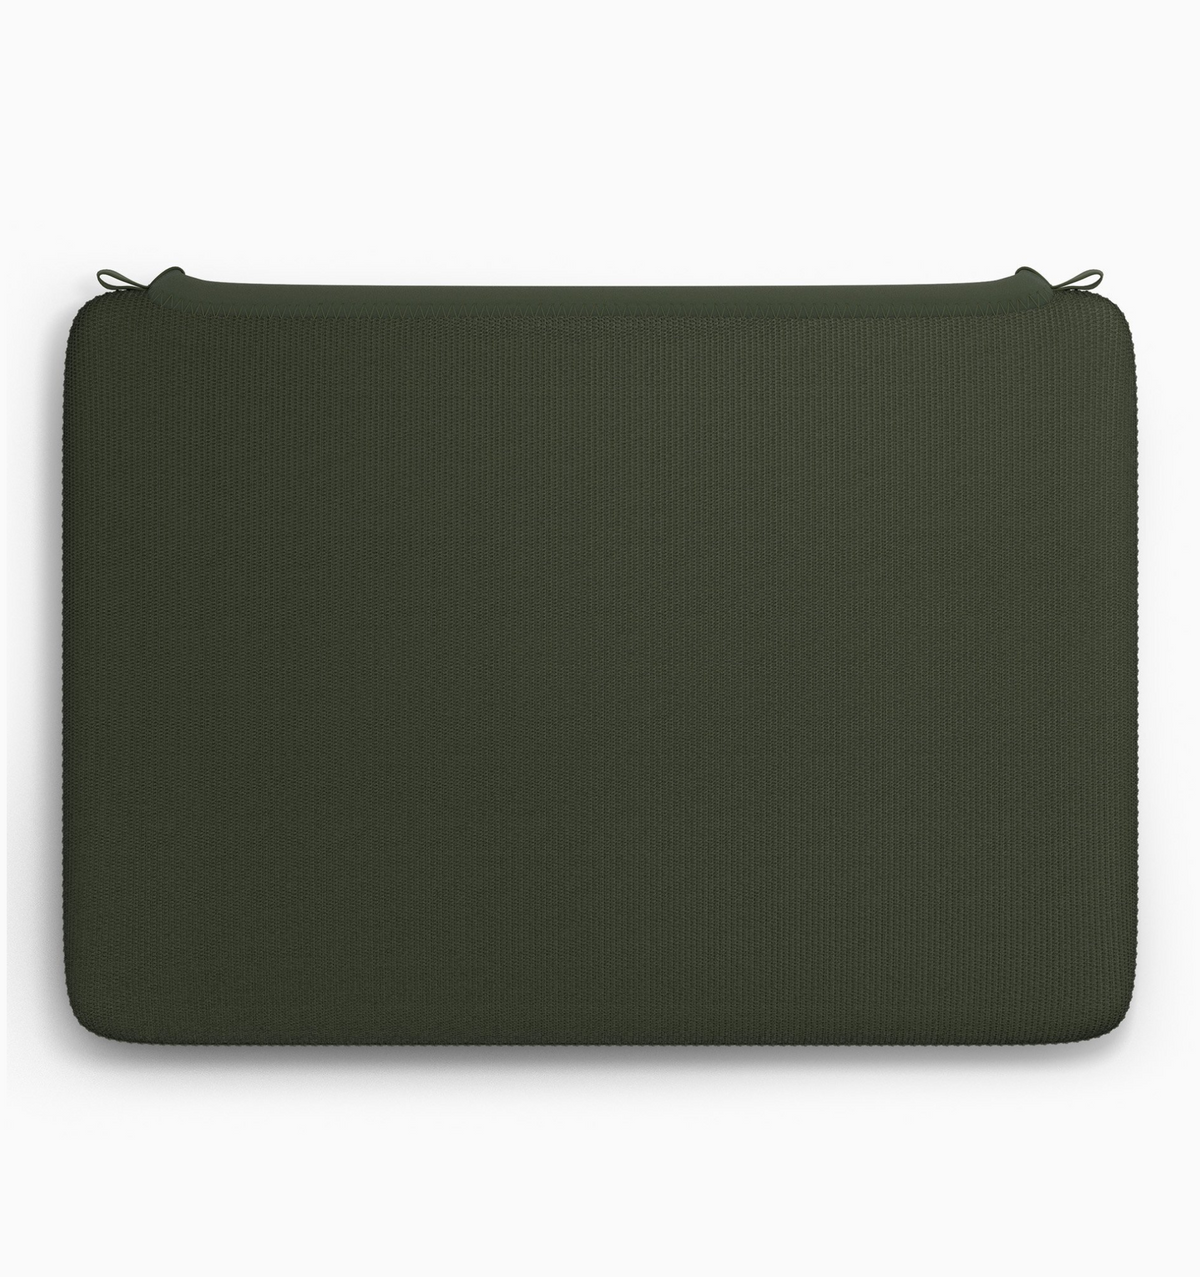 Rushfaster Laptop Sleeve For 15" MacBook Air - Green